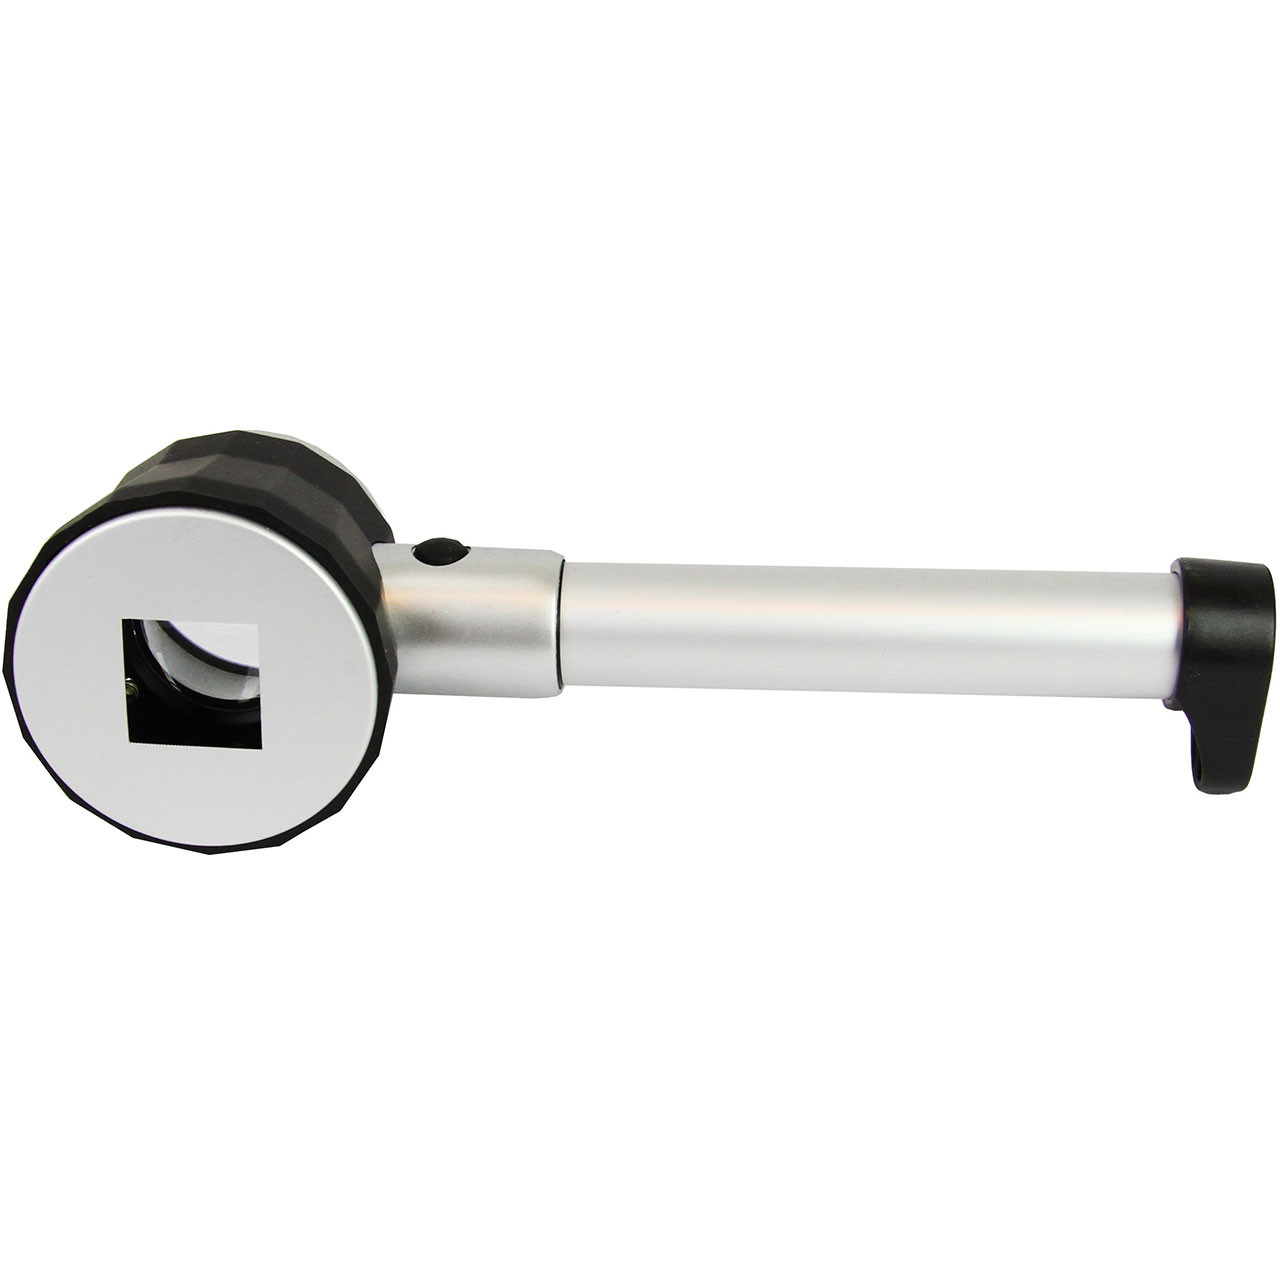 Magnifier- 10X General Purpose Illuminated